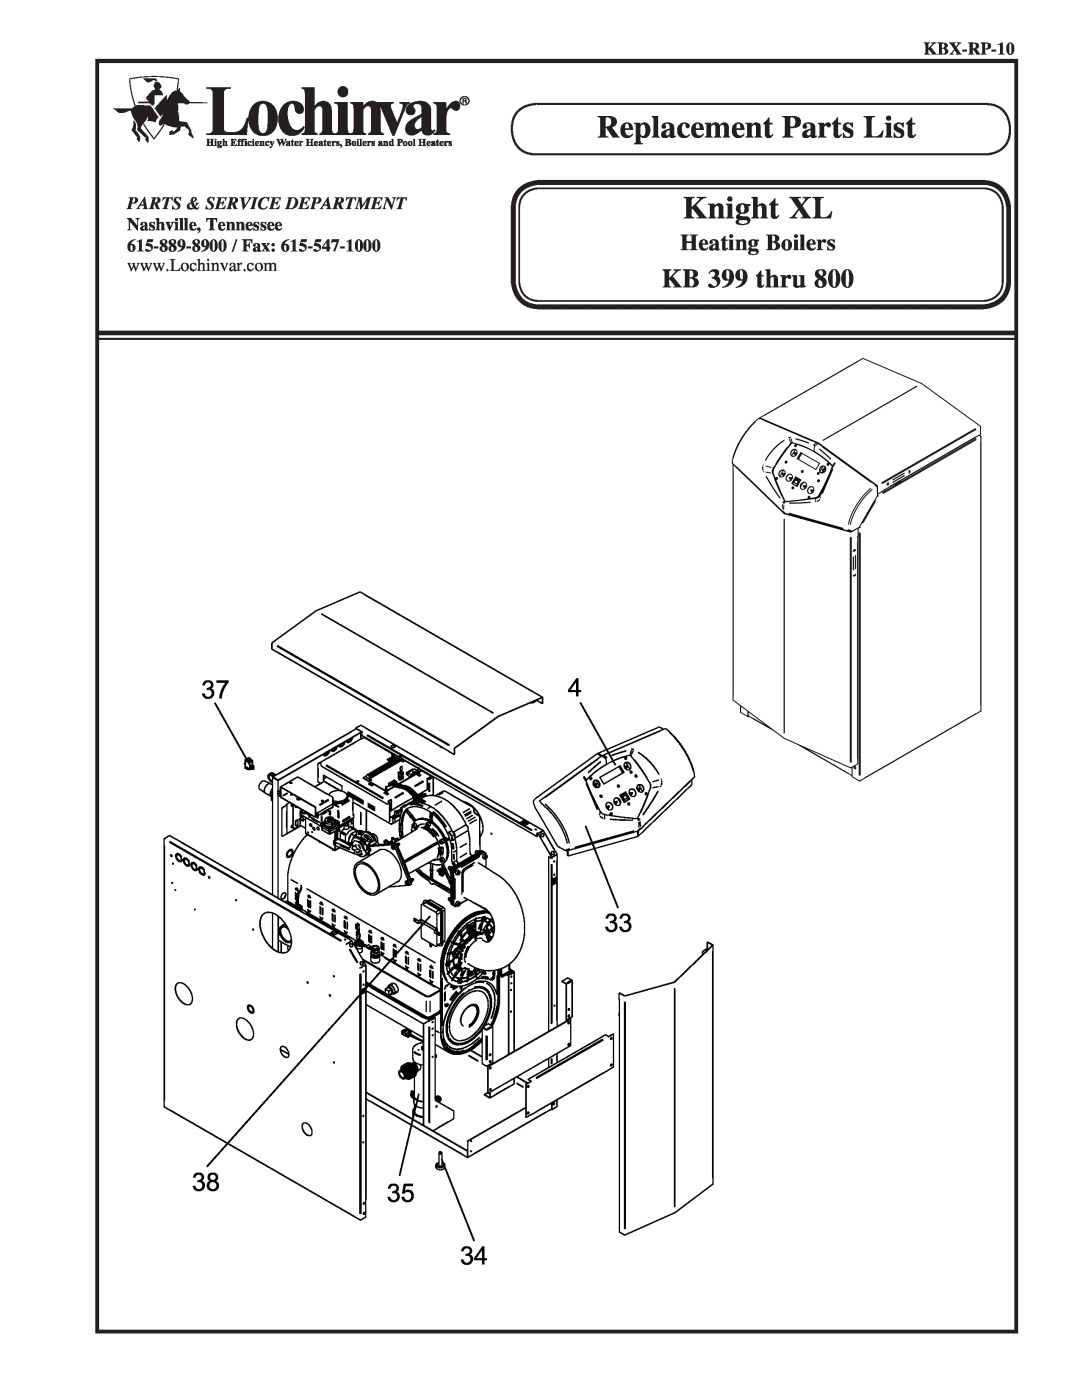 Lochinvar kb 800 manual Replacement Parts List, Knight XL, KB 399 thru, Heating Boilers, KBX-RP-10, Nashville, Tennessee 